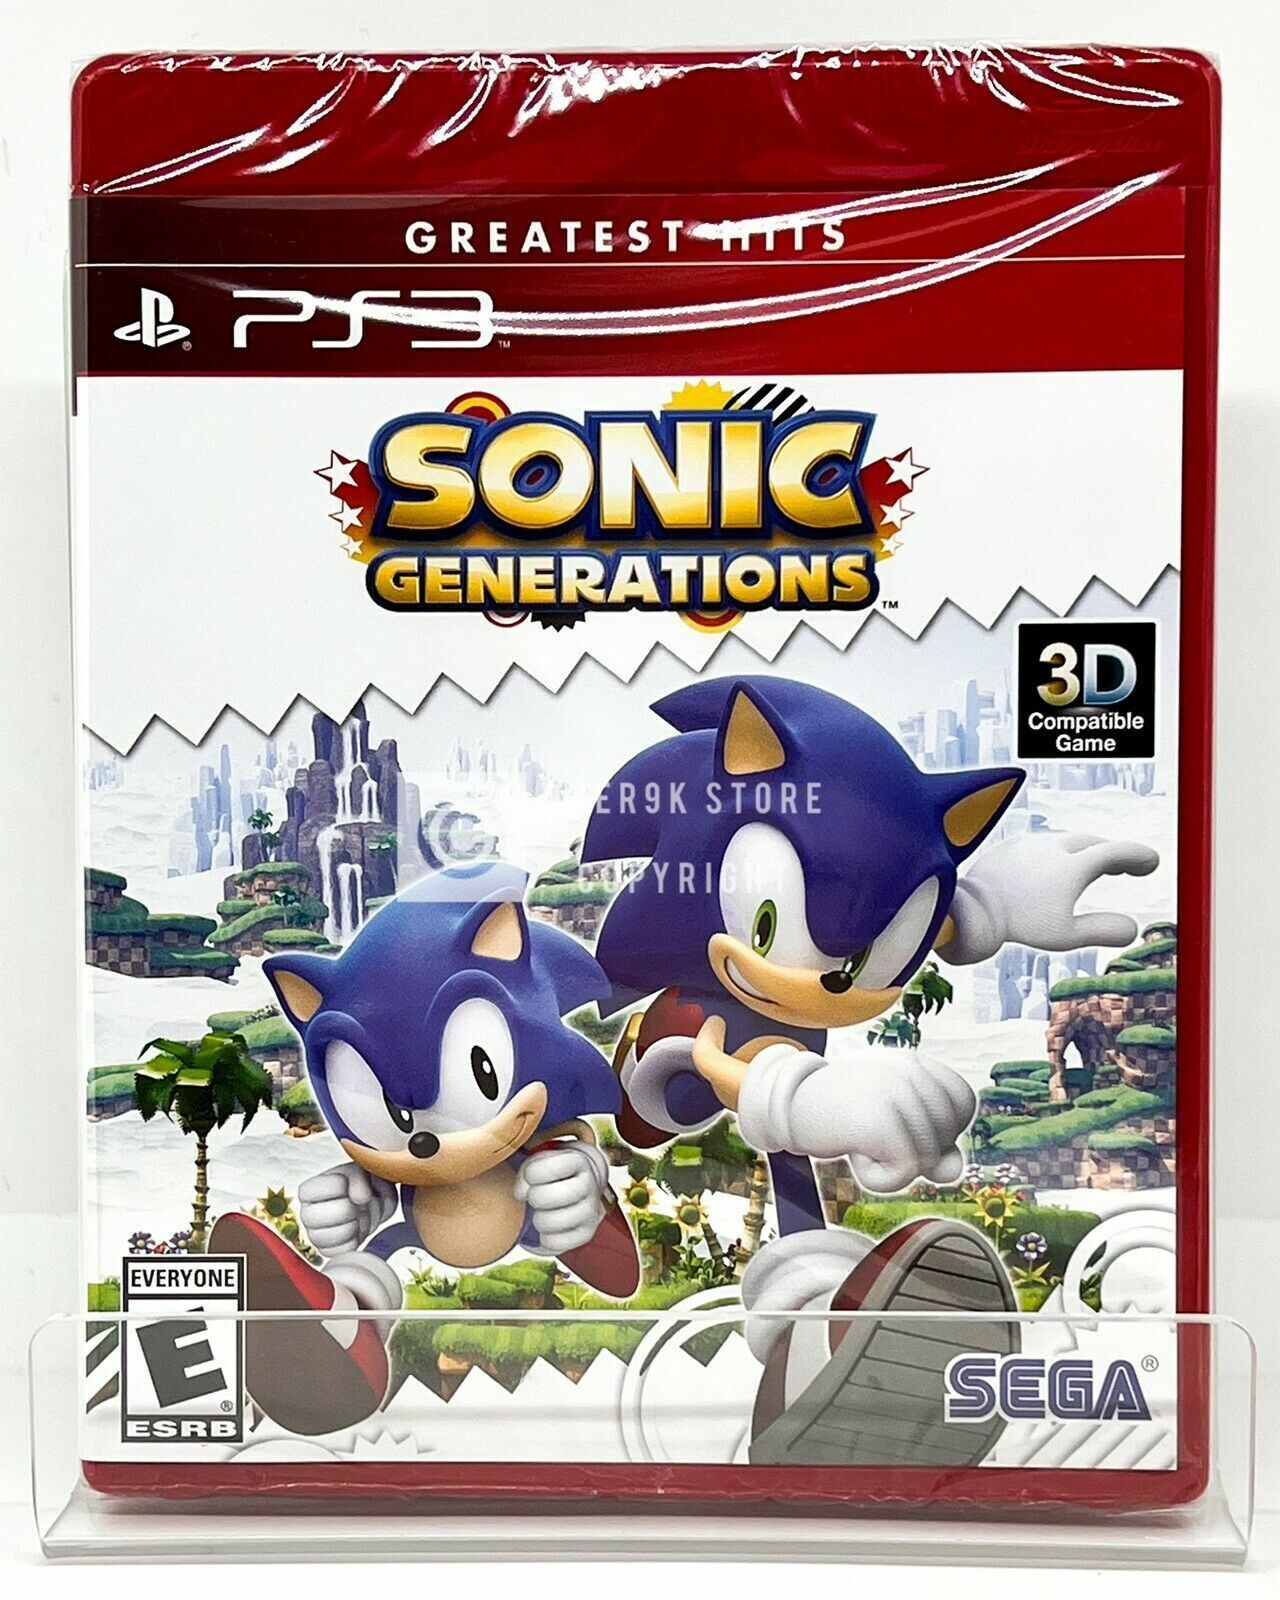 Excentriek straal Bedoel Sonic Generations - PS3 - Brand New | Factory Sealed 10086690552 | eBay